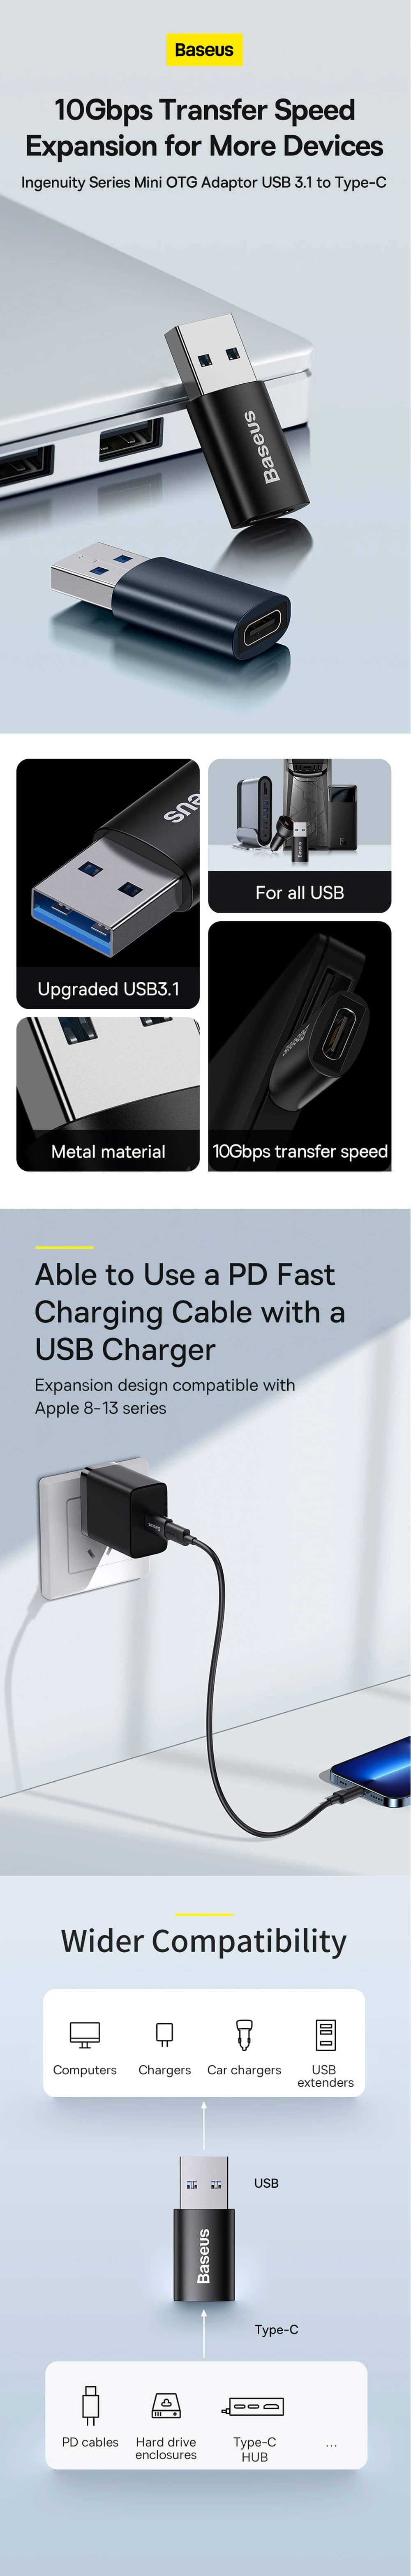 Baseus Ingenuity Series Mini OTG Adaptor USB A to USB C 3.1 4